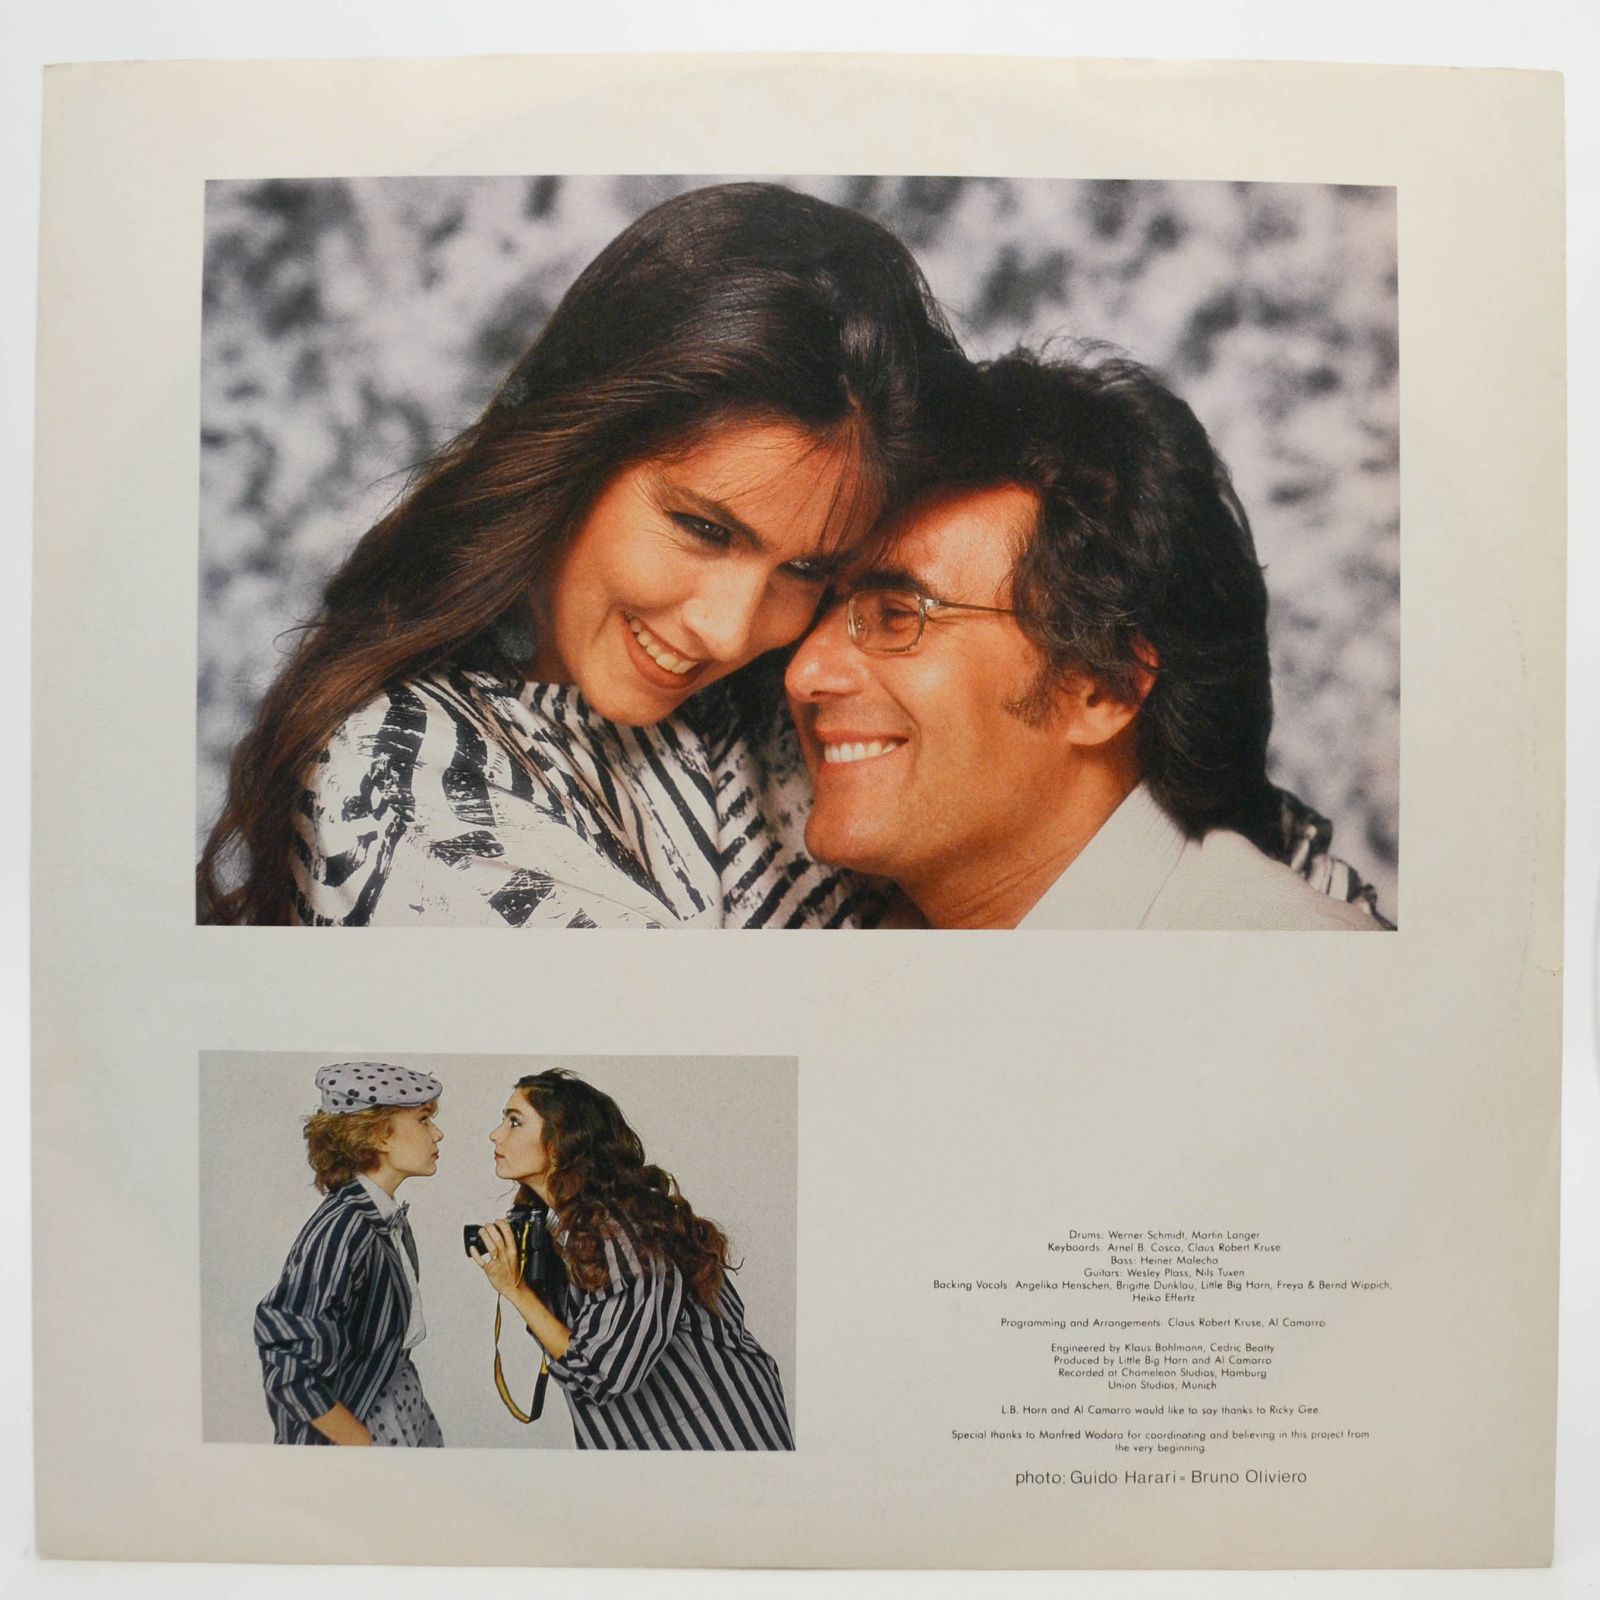 Al Bano & Romina Power — Libertà! (1-st, Italy), 1987